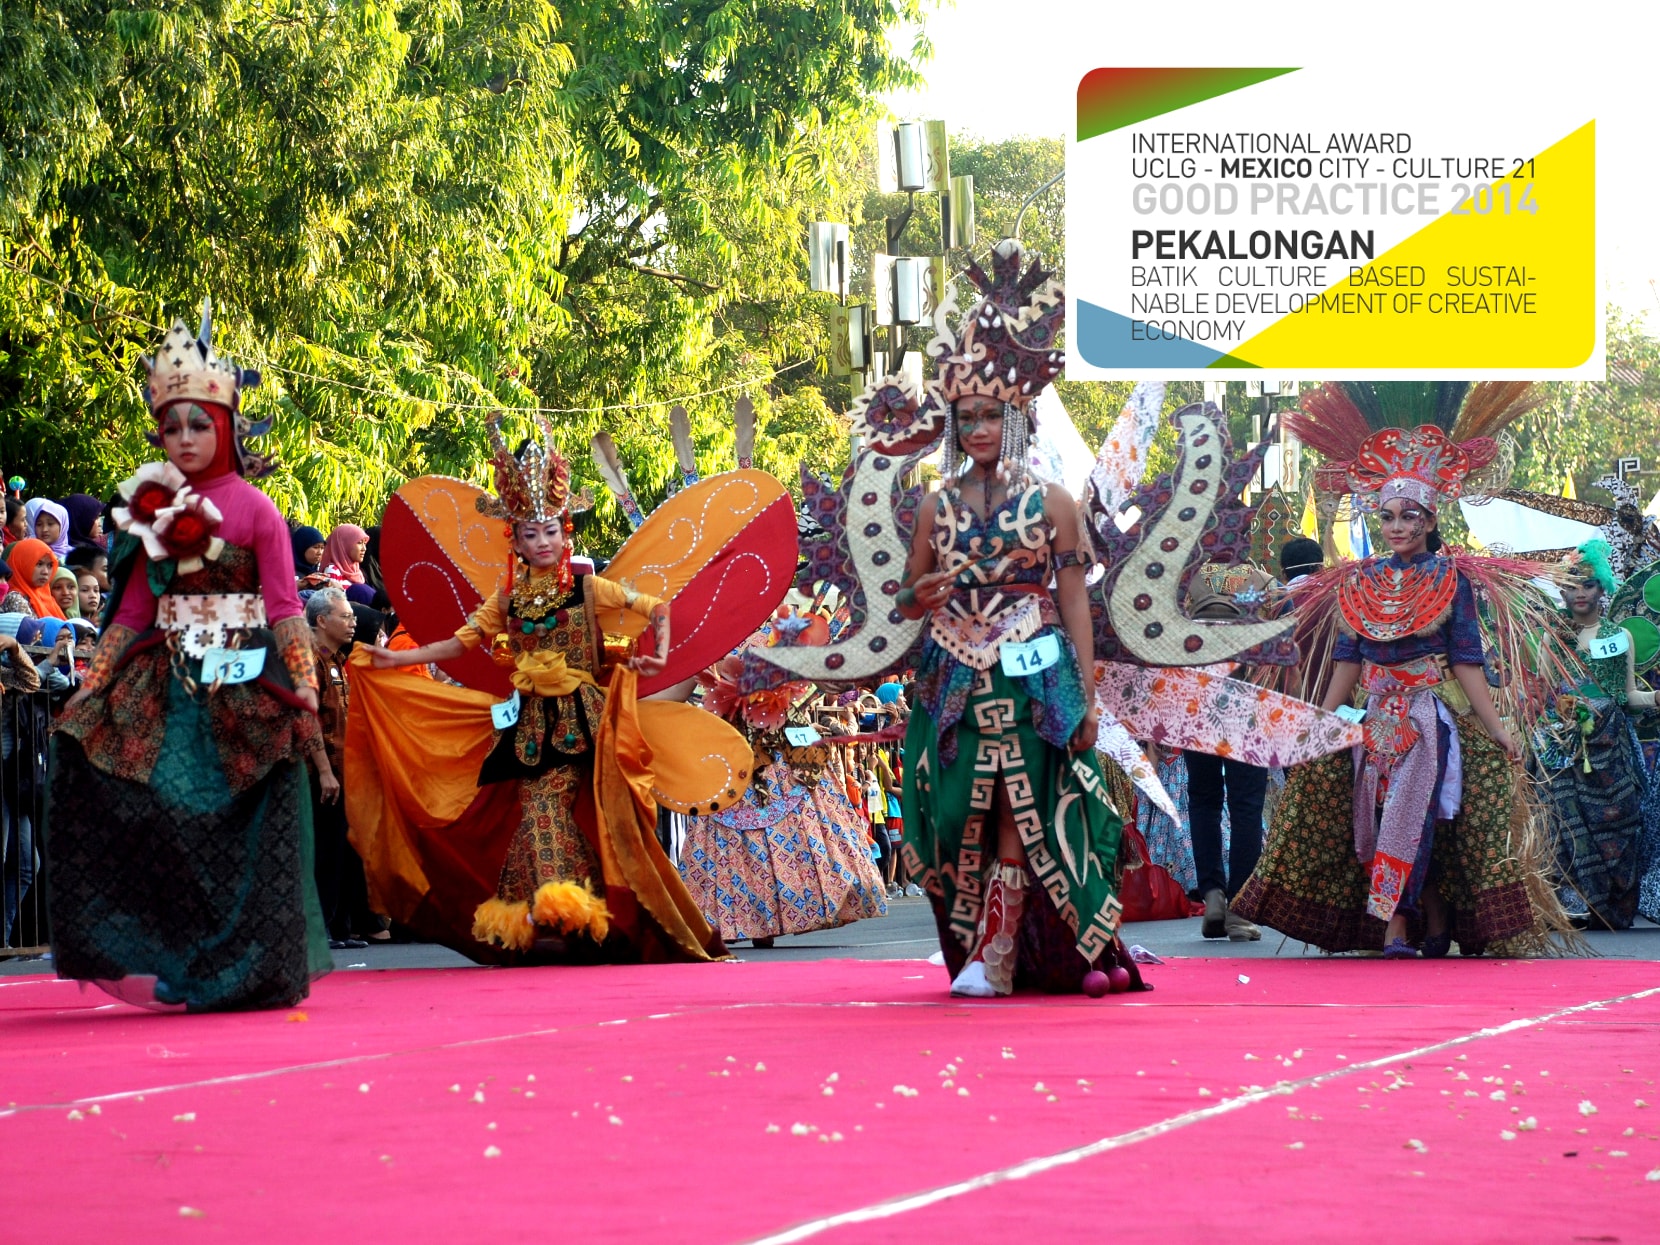 Batik culture based sustainable development of creative economy